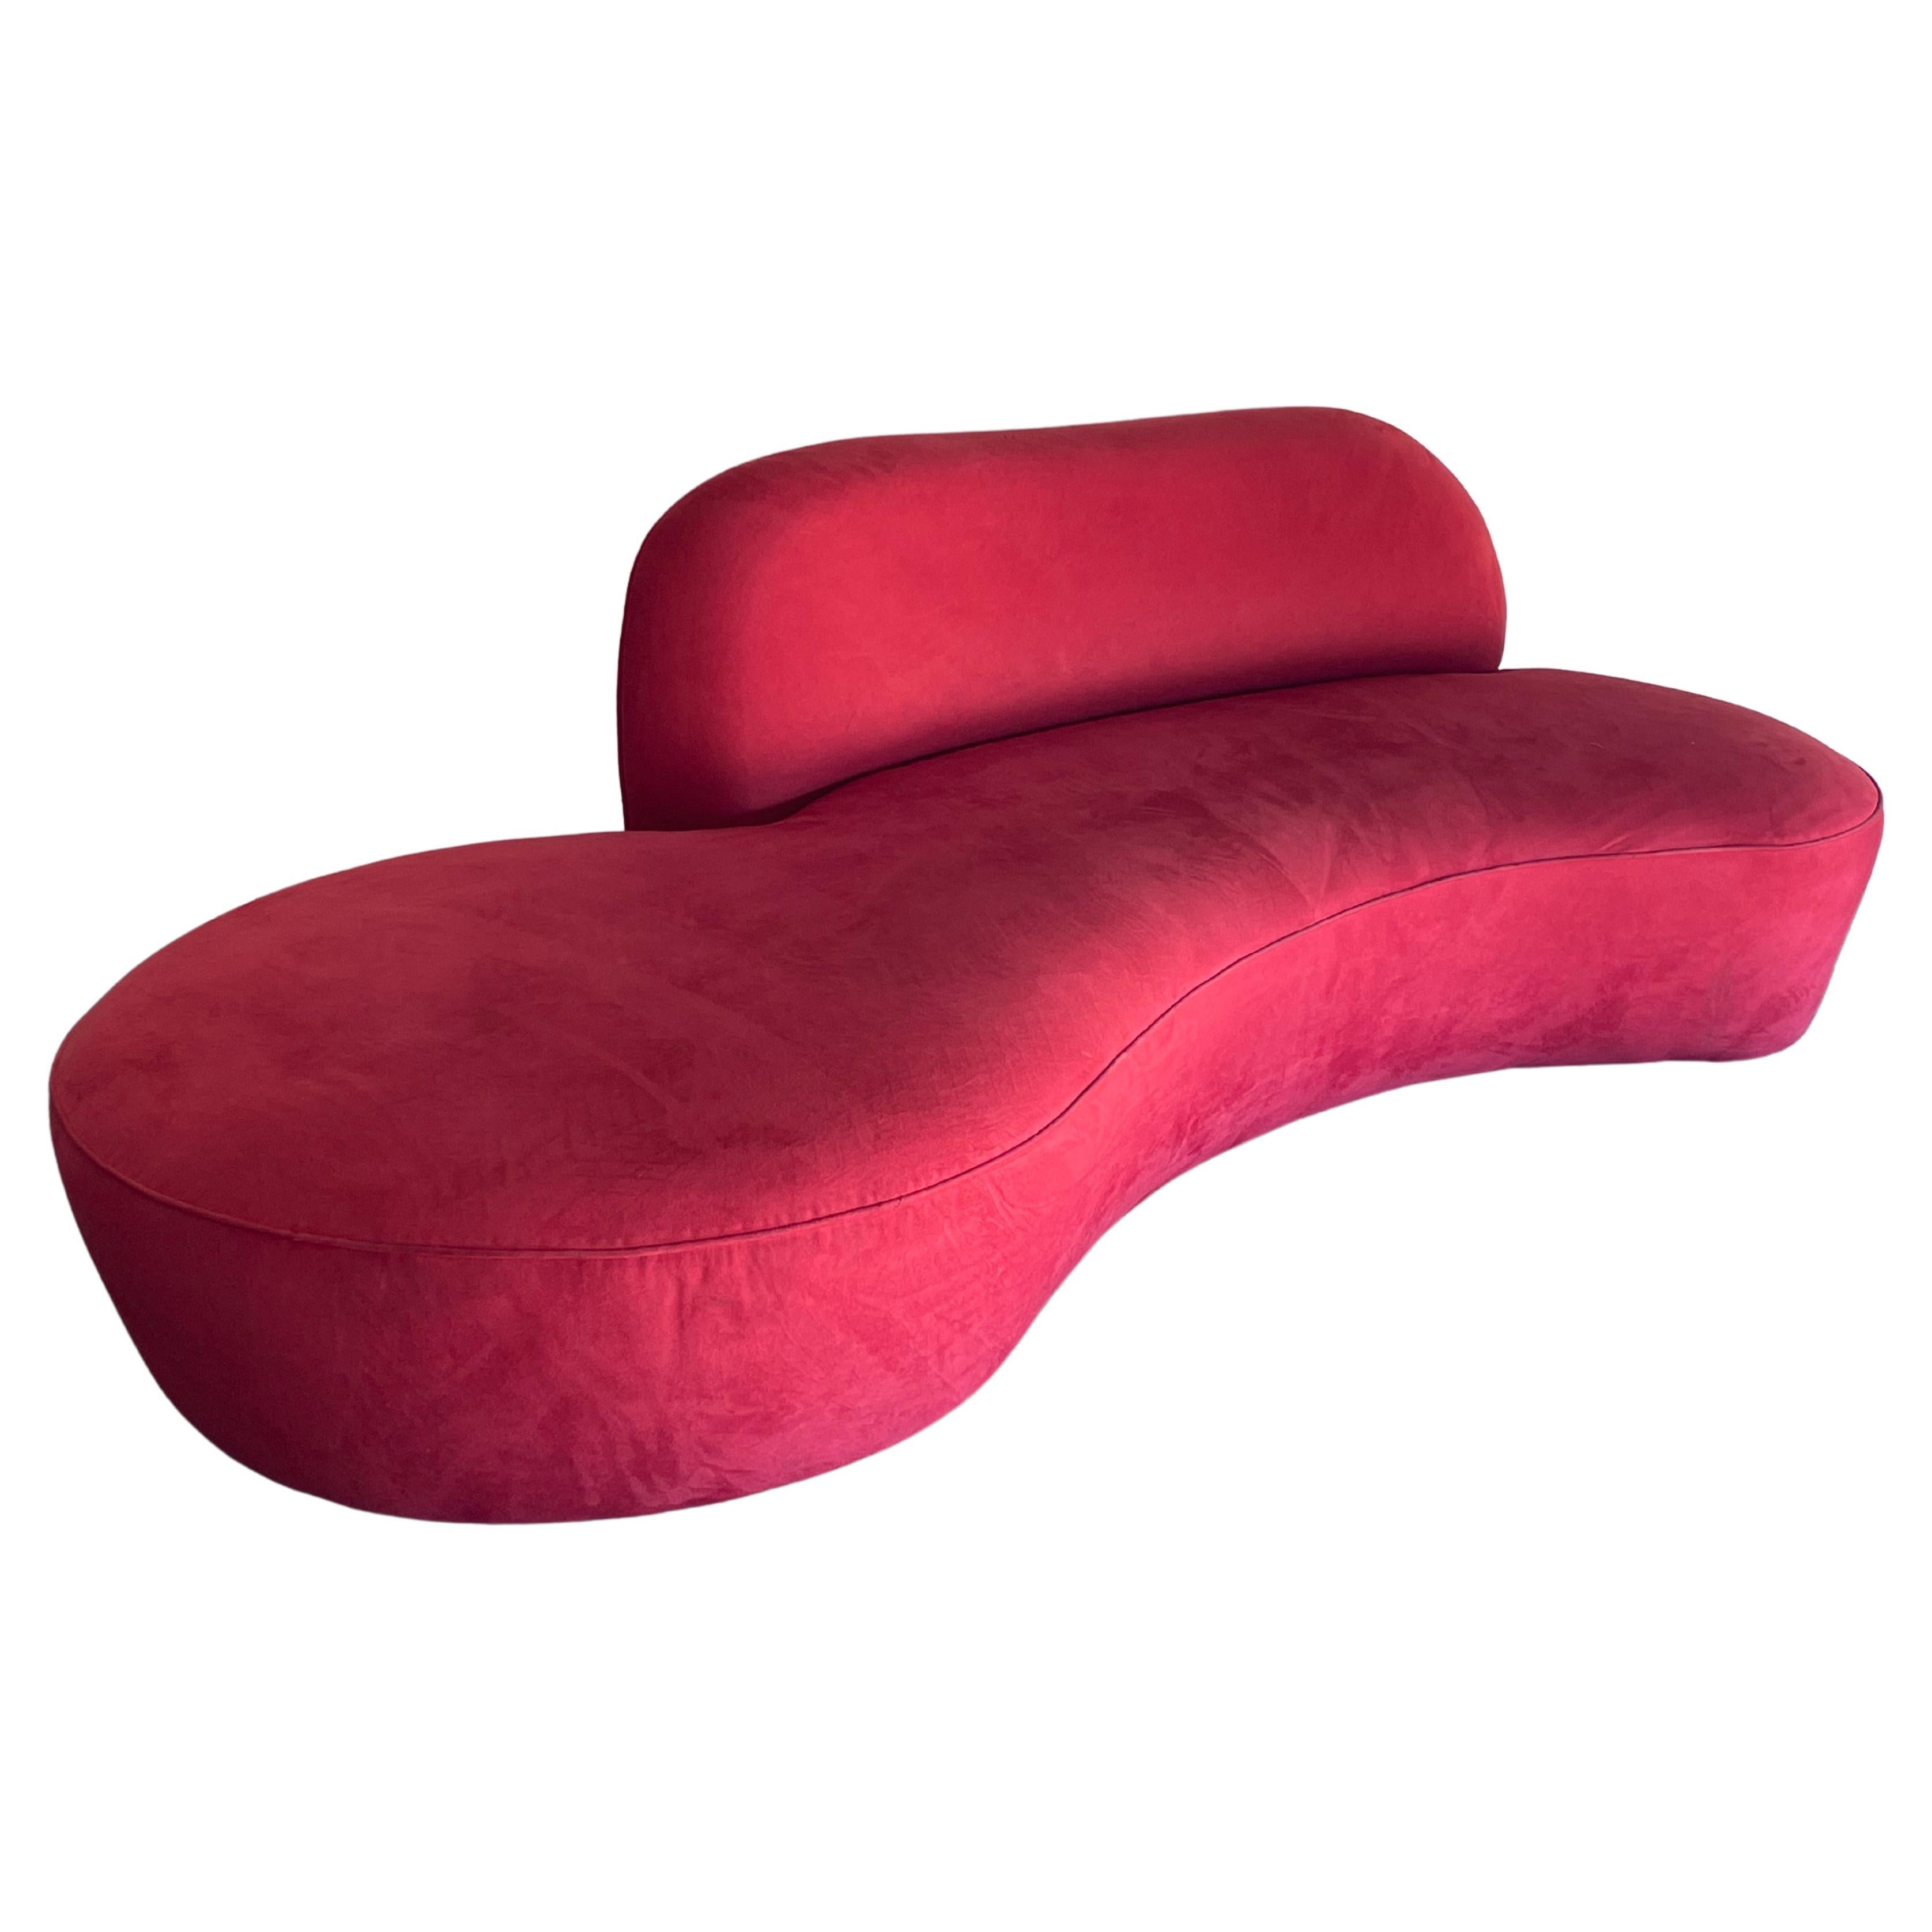 Vladimir Kagan “Zoe” Organic Freeform Sofa for American Leather